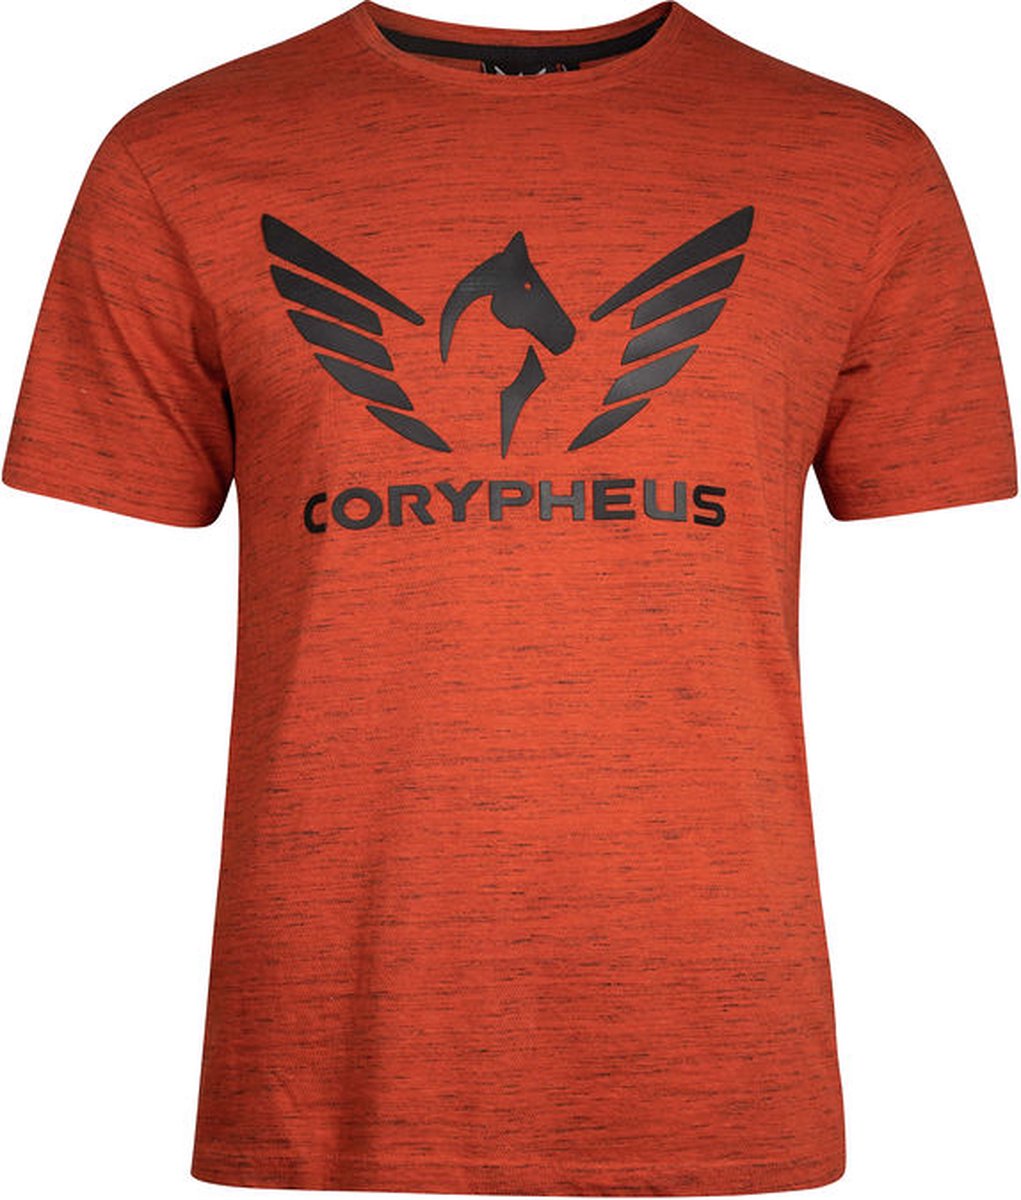 Corypheus Burnt Henna Men's T-Shirt - XLarge